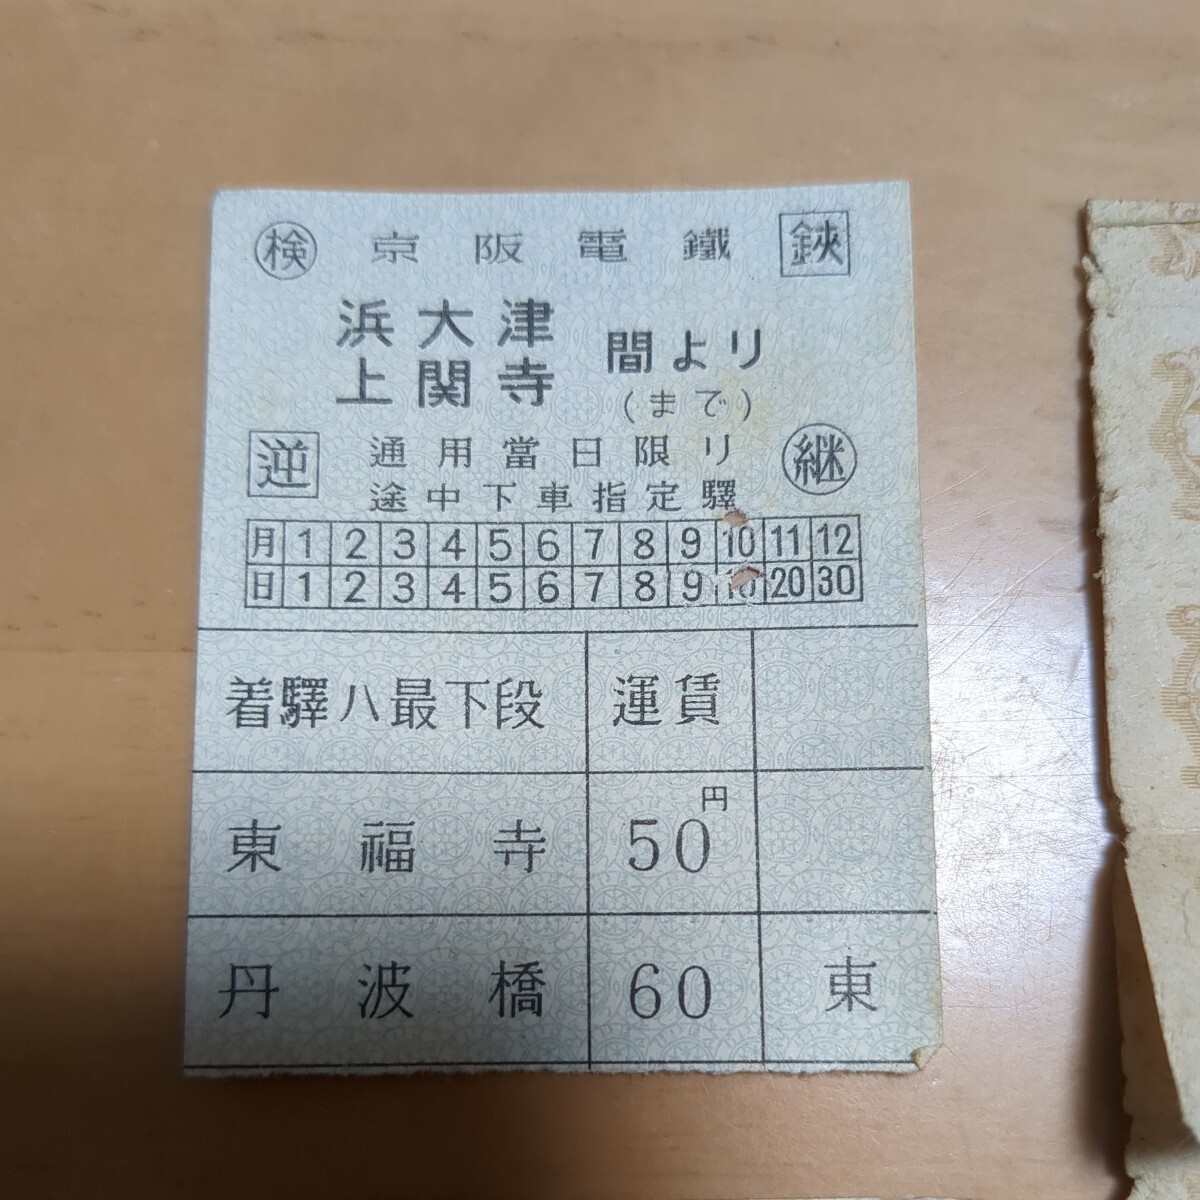  железная дорога . талон столица . электро- . пассажирский билет частота талон билет Showa первый период старый билет суммировать ⑫